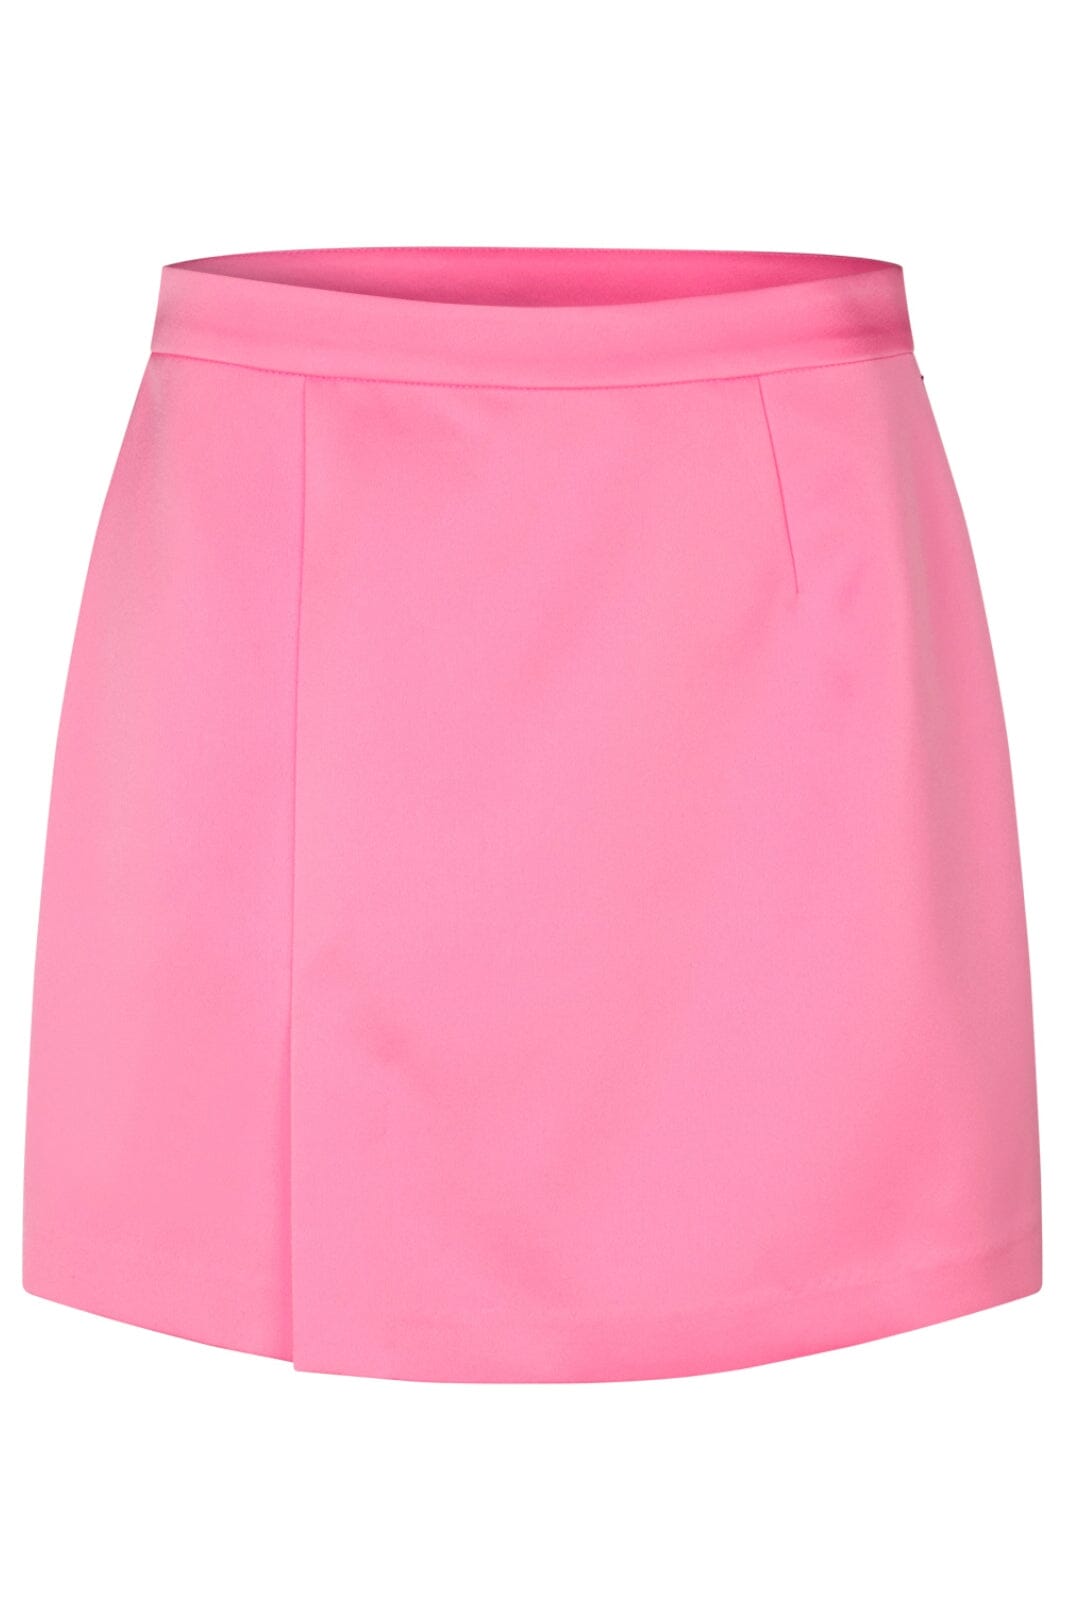 Forudbestilling - Cras - Samycras Skirt - Pink 933C (Februar) Nederdele 